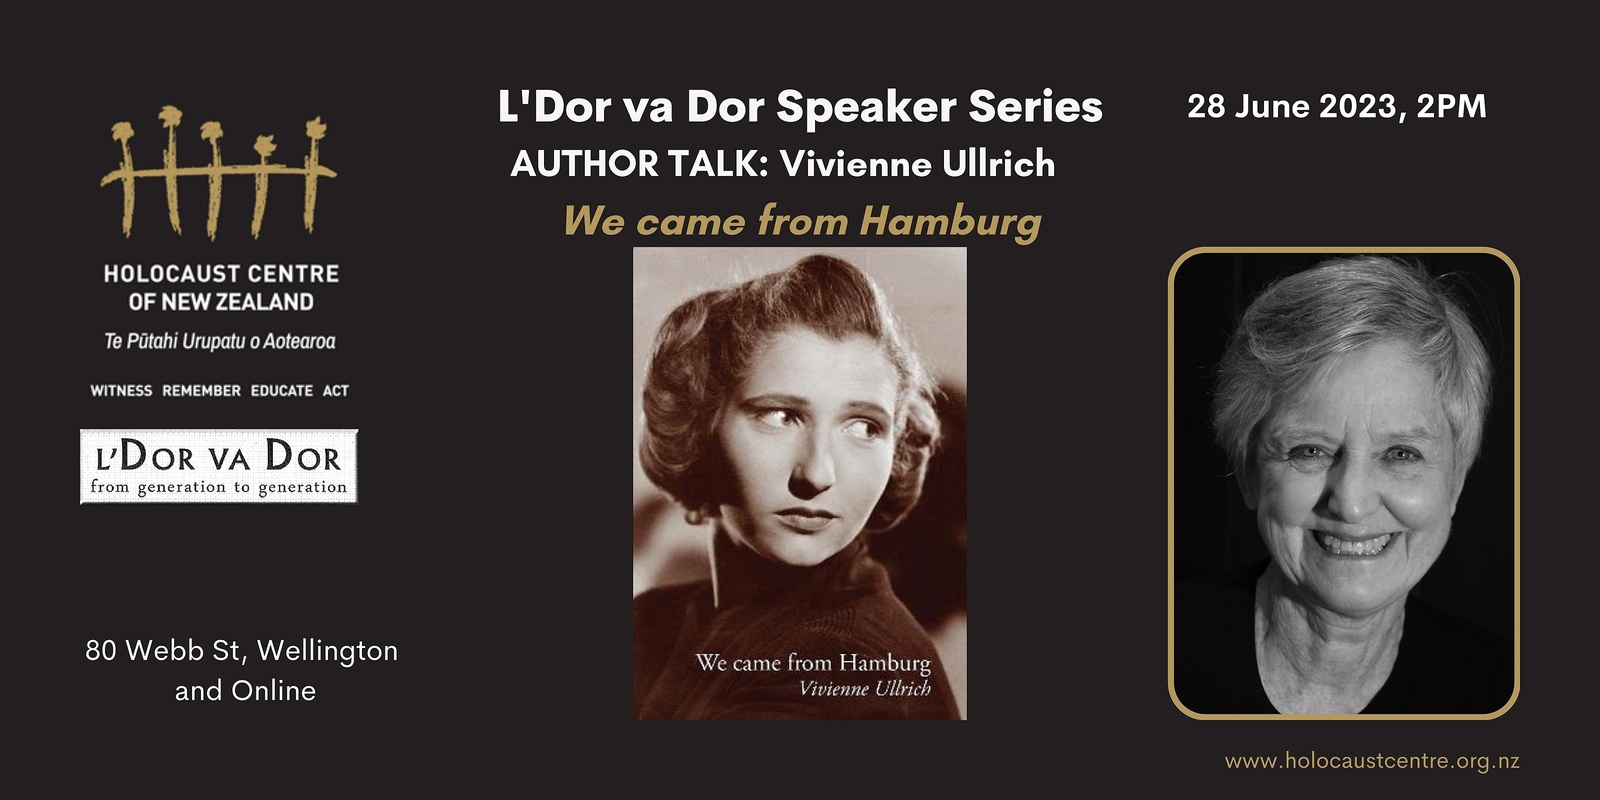 L'Dor Vador Series 2023 - Author Talk: We Came From Hamburg - Vivienne Ullrich